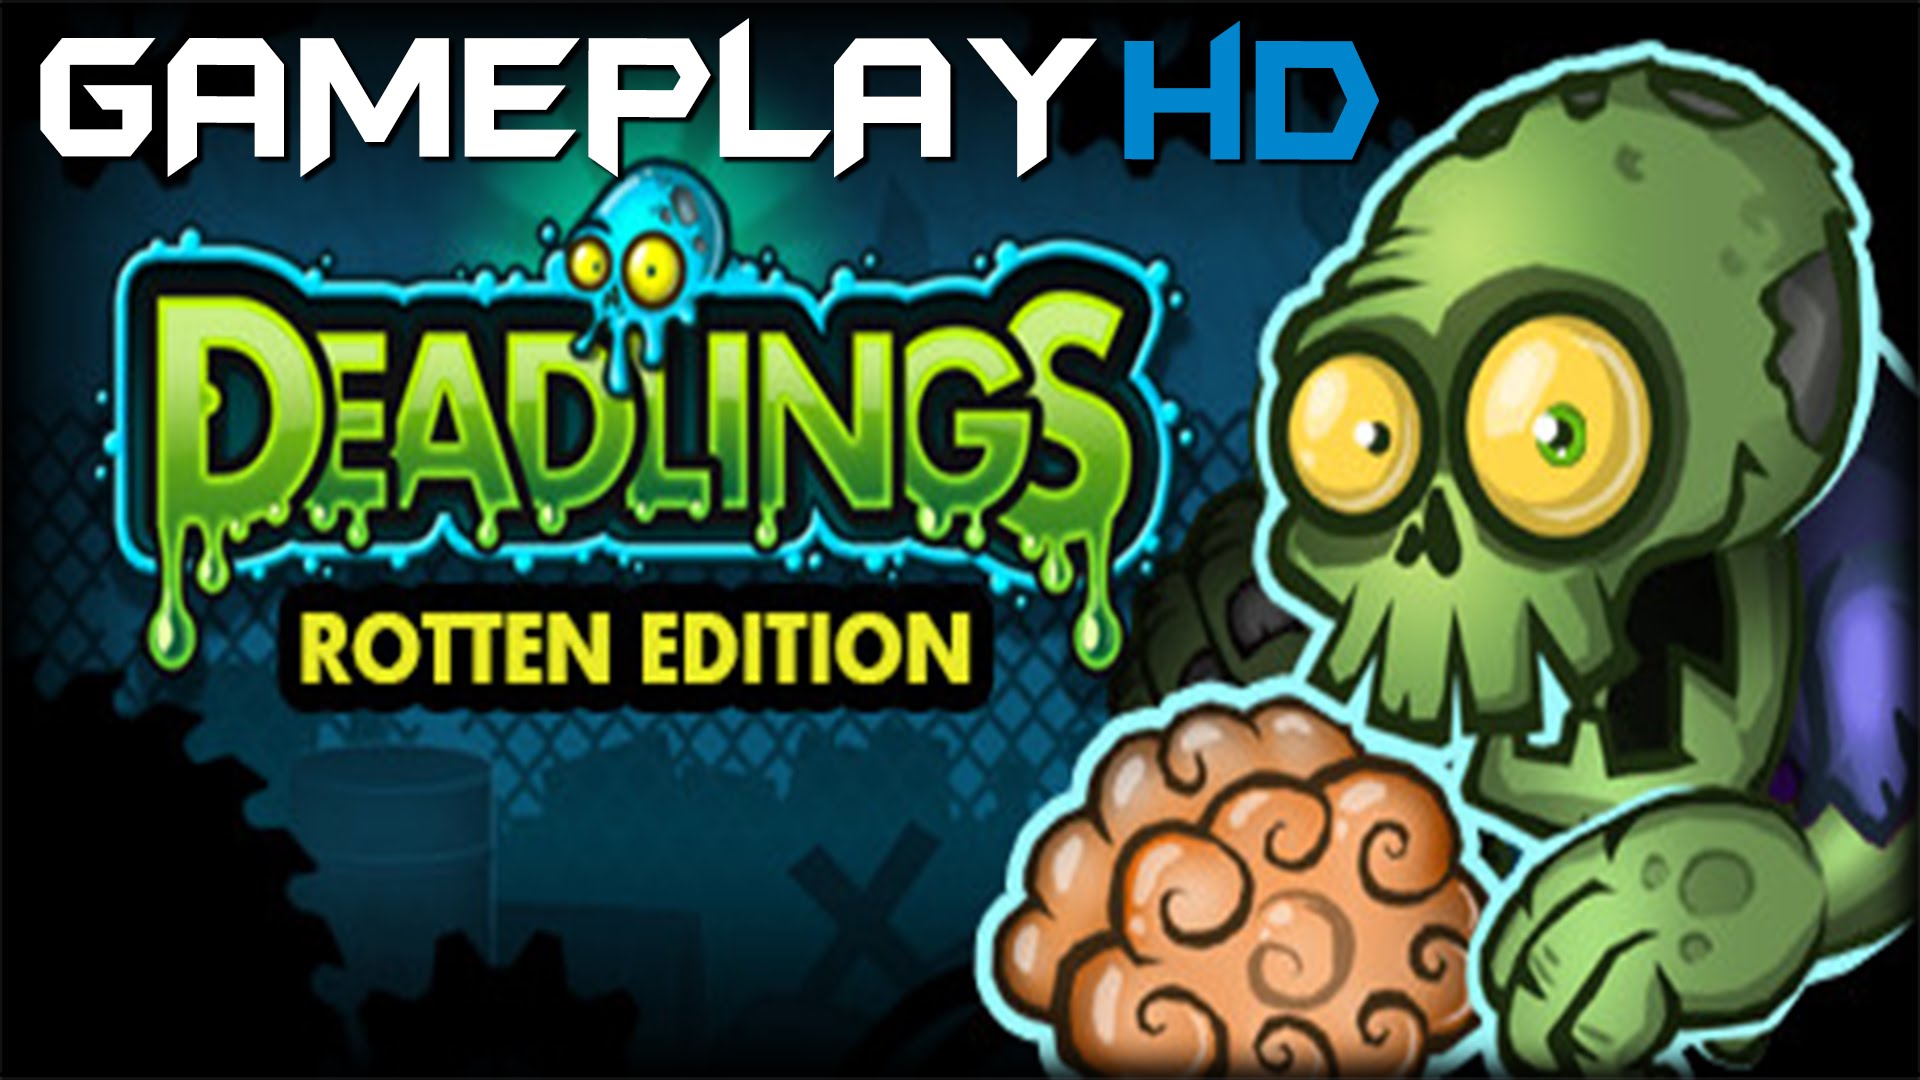 Deadlings - Rotten Edition HD wallpapers, Desktop wallpaper - most viewed